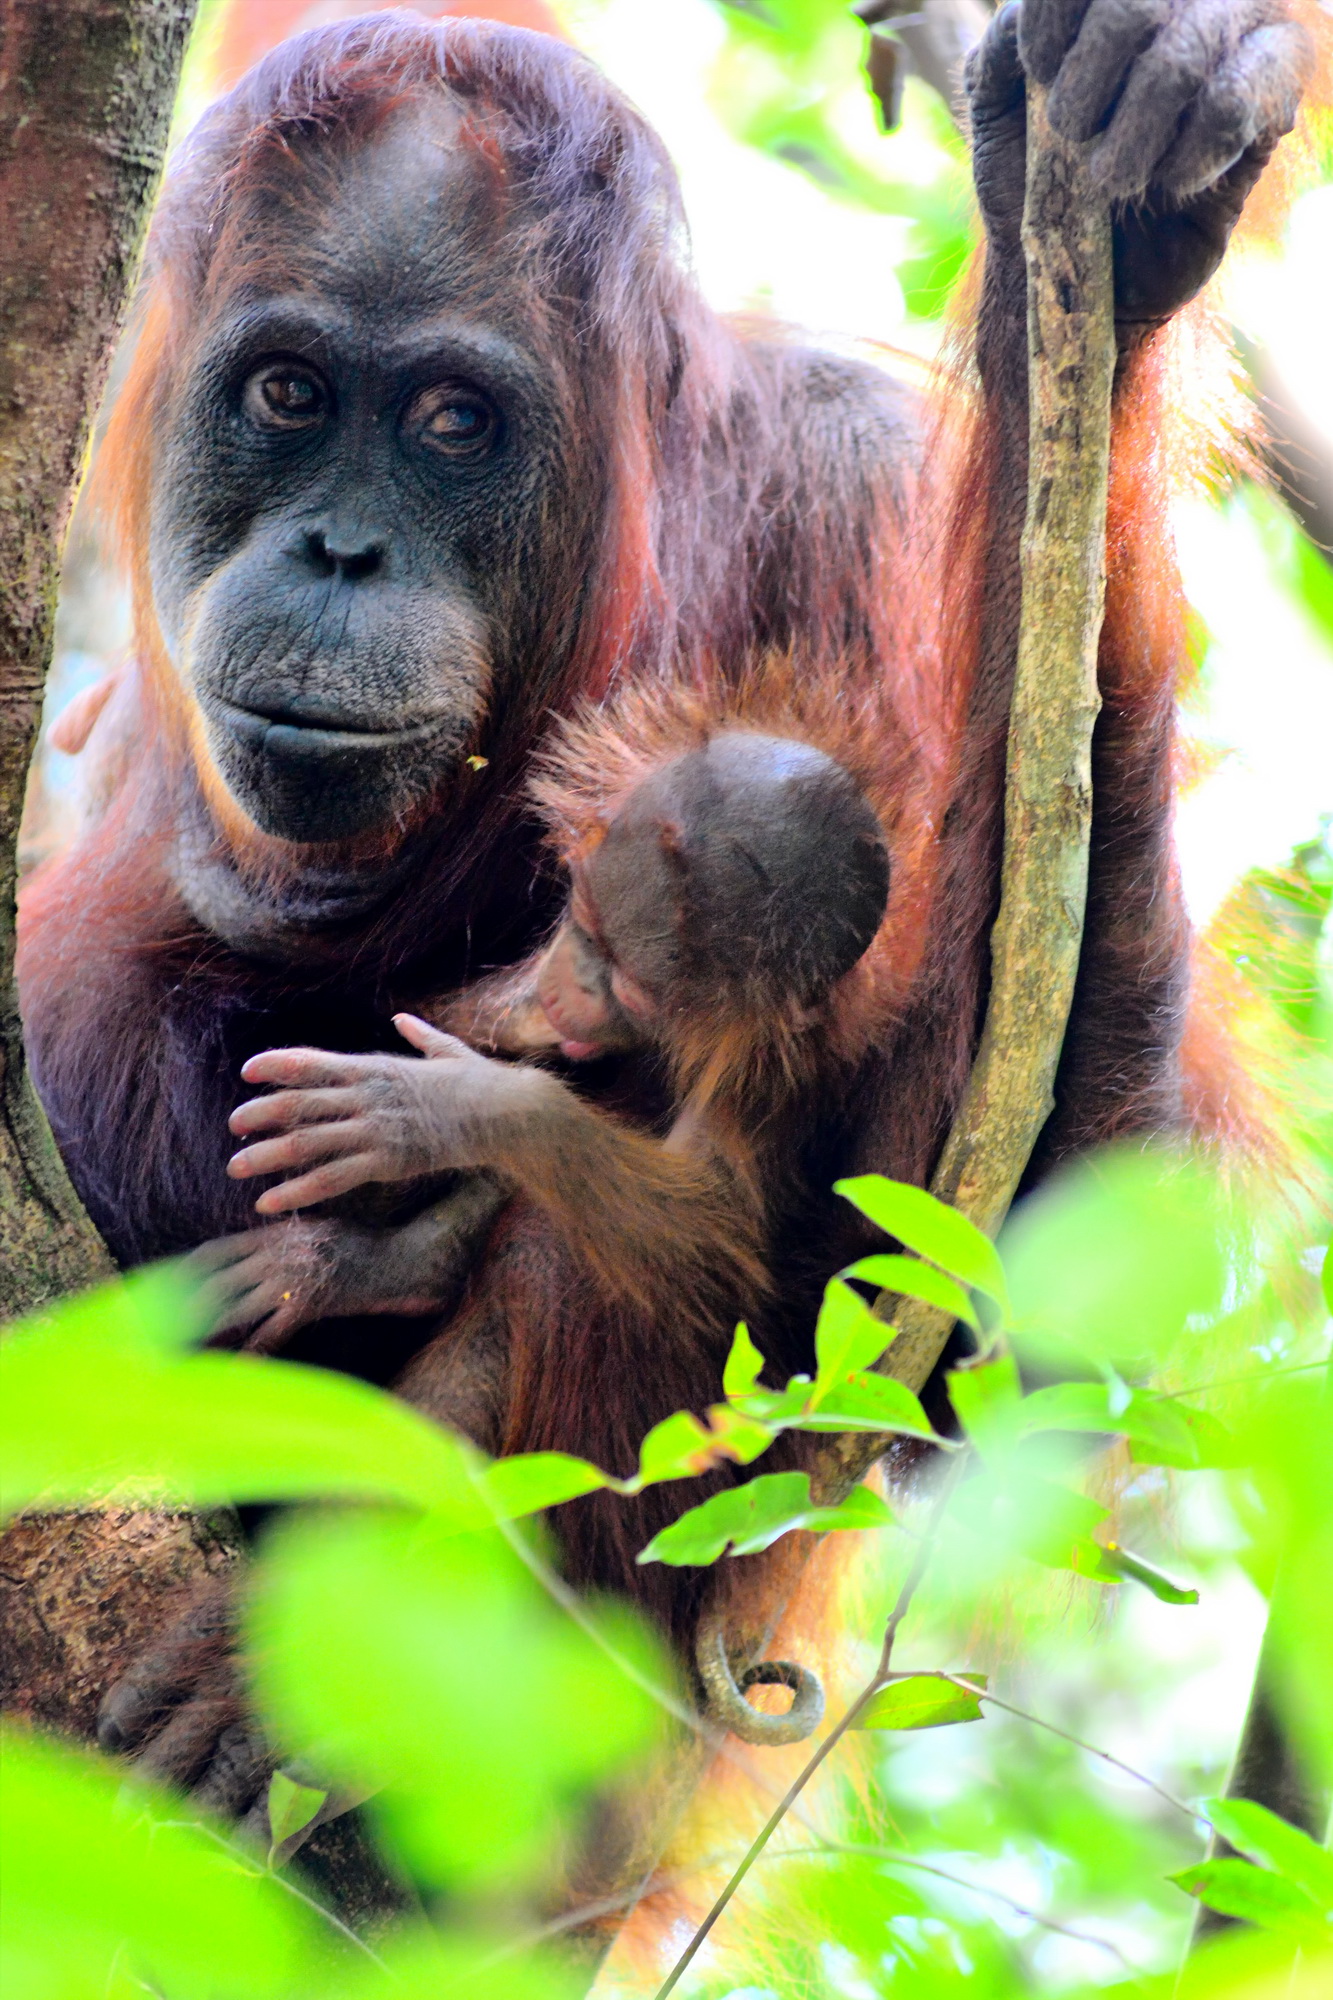 Paula with an infant in 2015. Image© Orangutan Foundation.